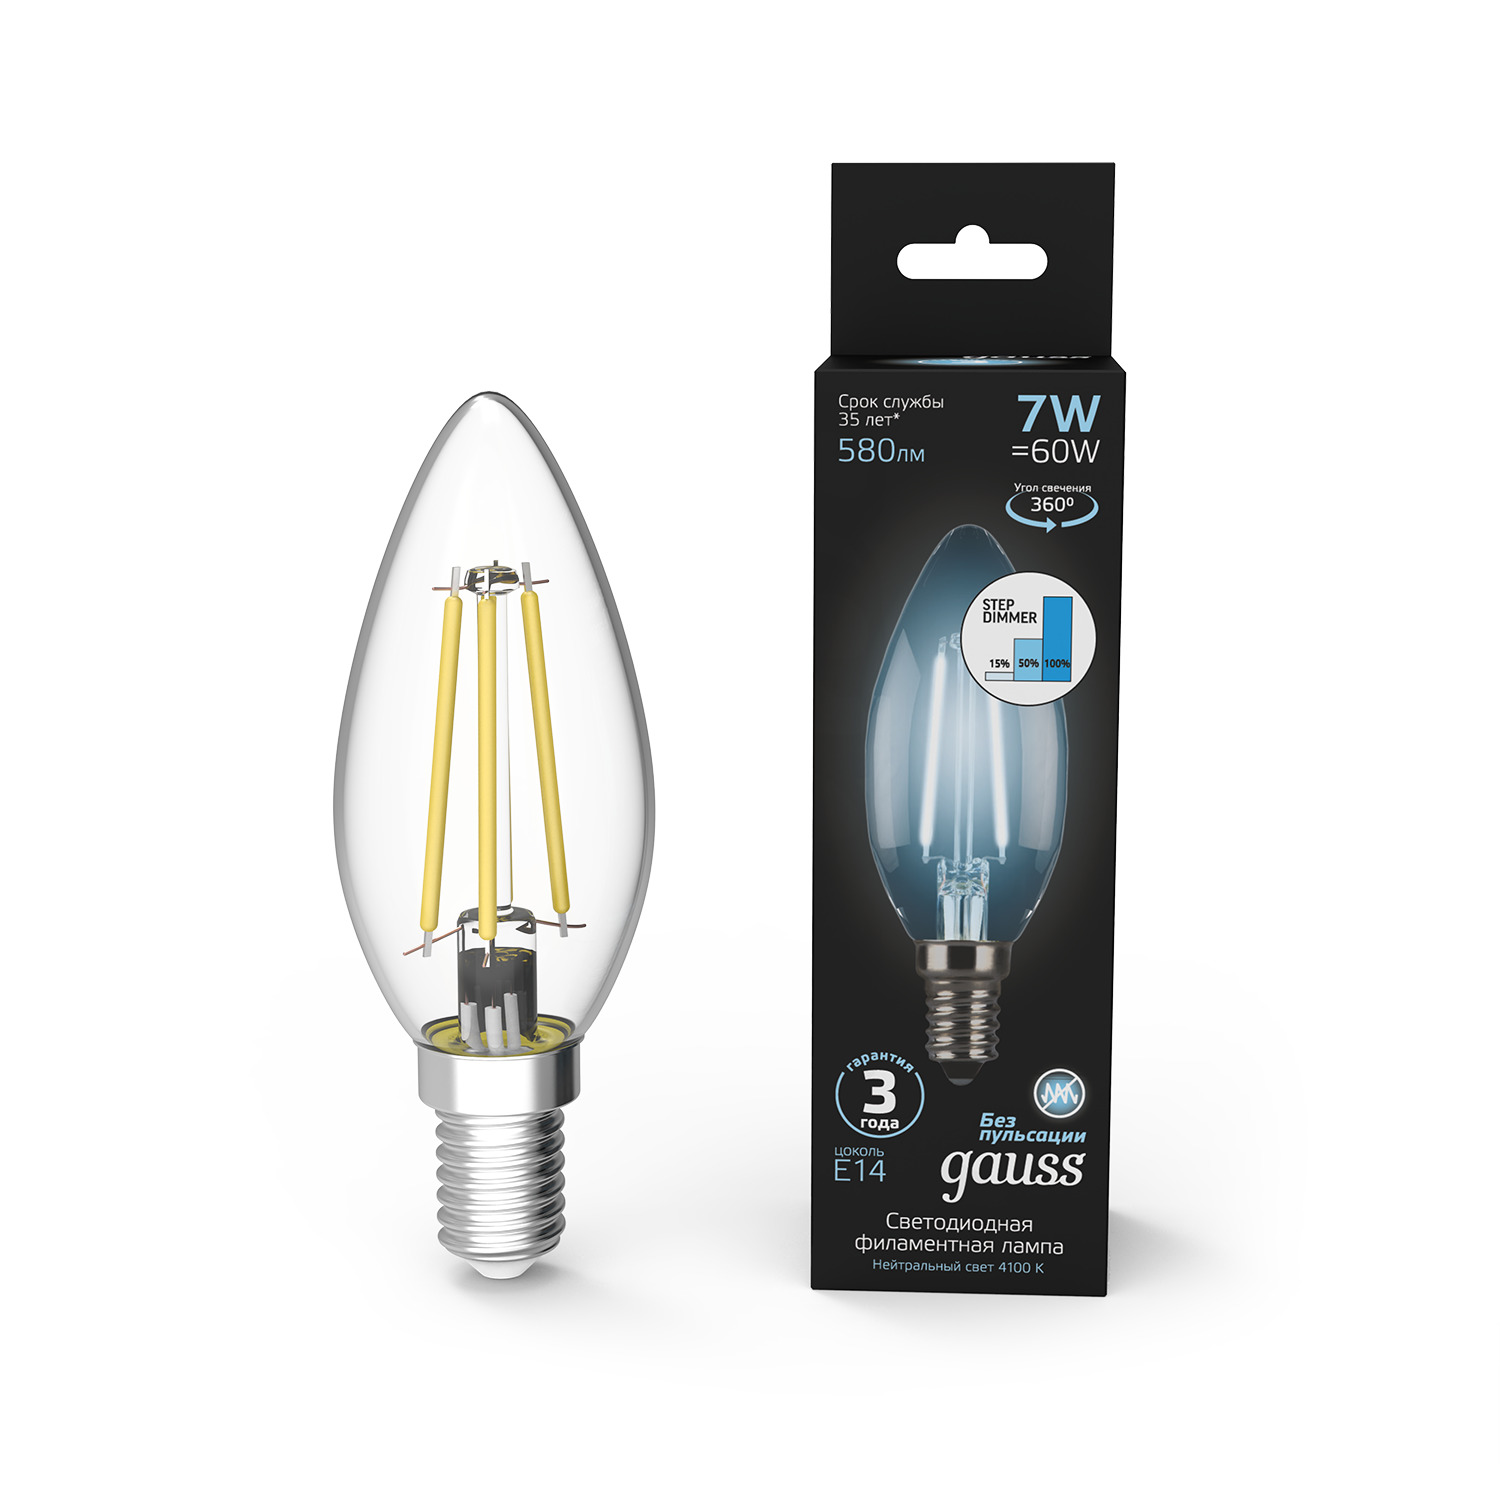 Лампа Gauss LED Filament Свеча E14 7W 580lm 4100К step dimmable 1/10/50 лампа gauss led filament свеча на ветру e14 7w 580lm 4100k step dimmable 1 10 50